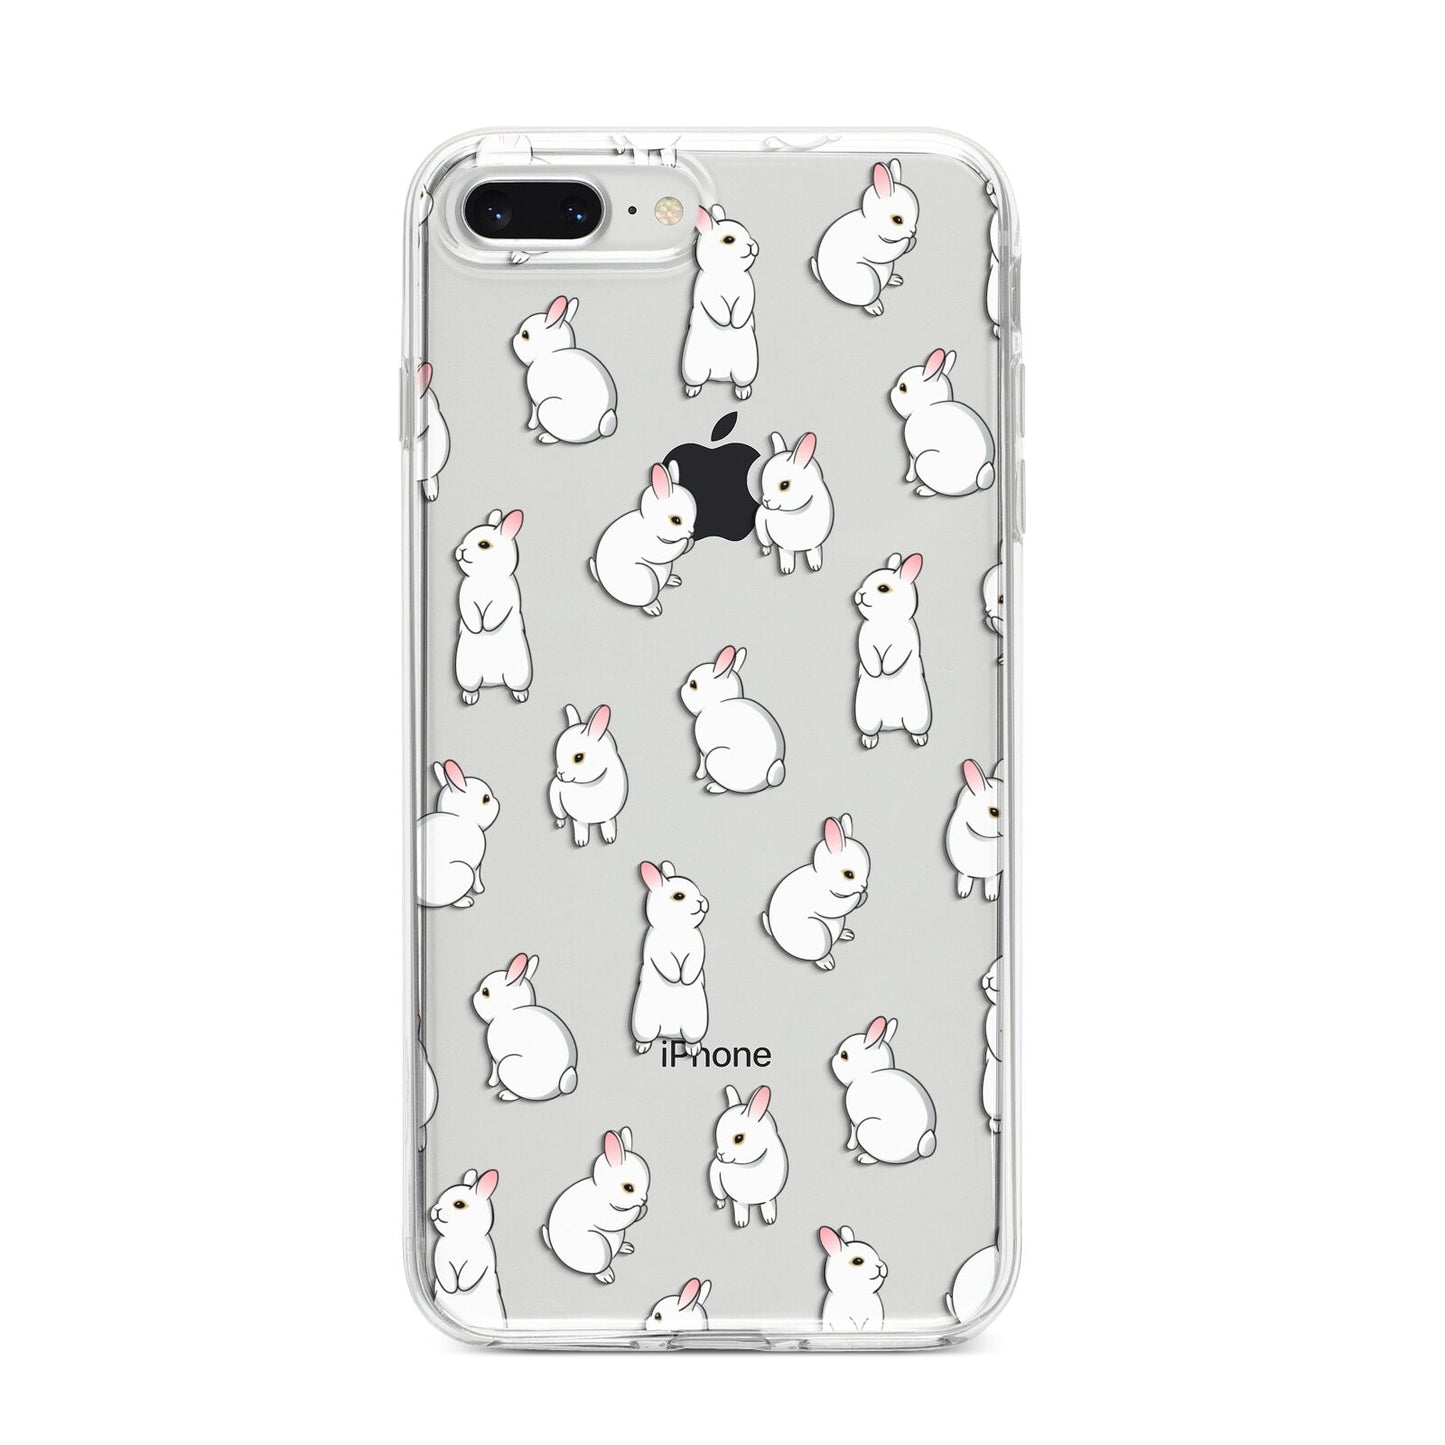 Bunny Rabbit iPhone 8 Plus Bumper Case on Silver iPhone